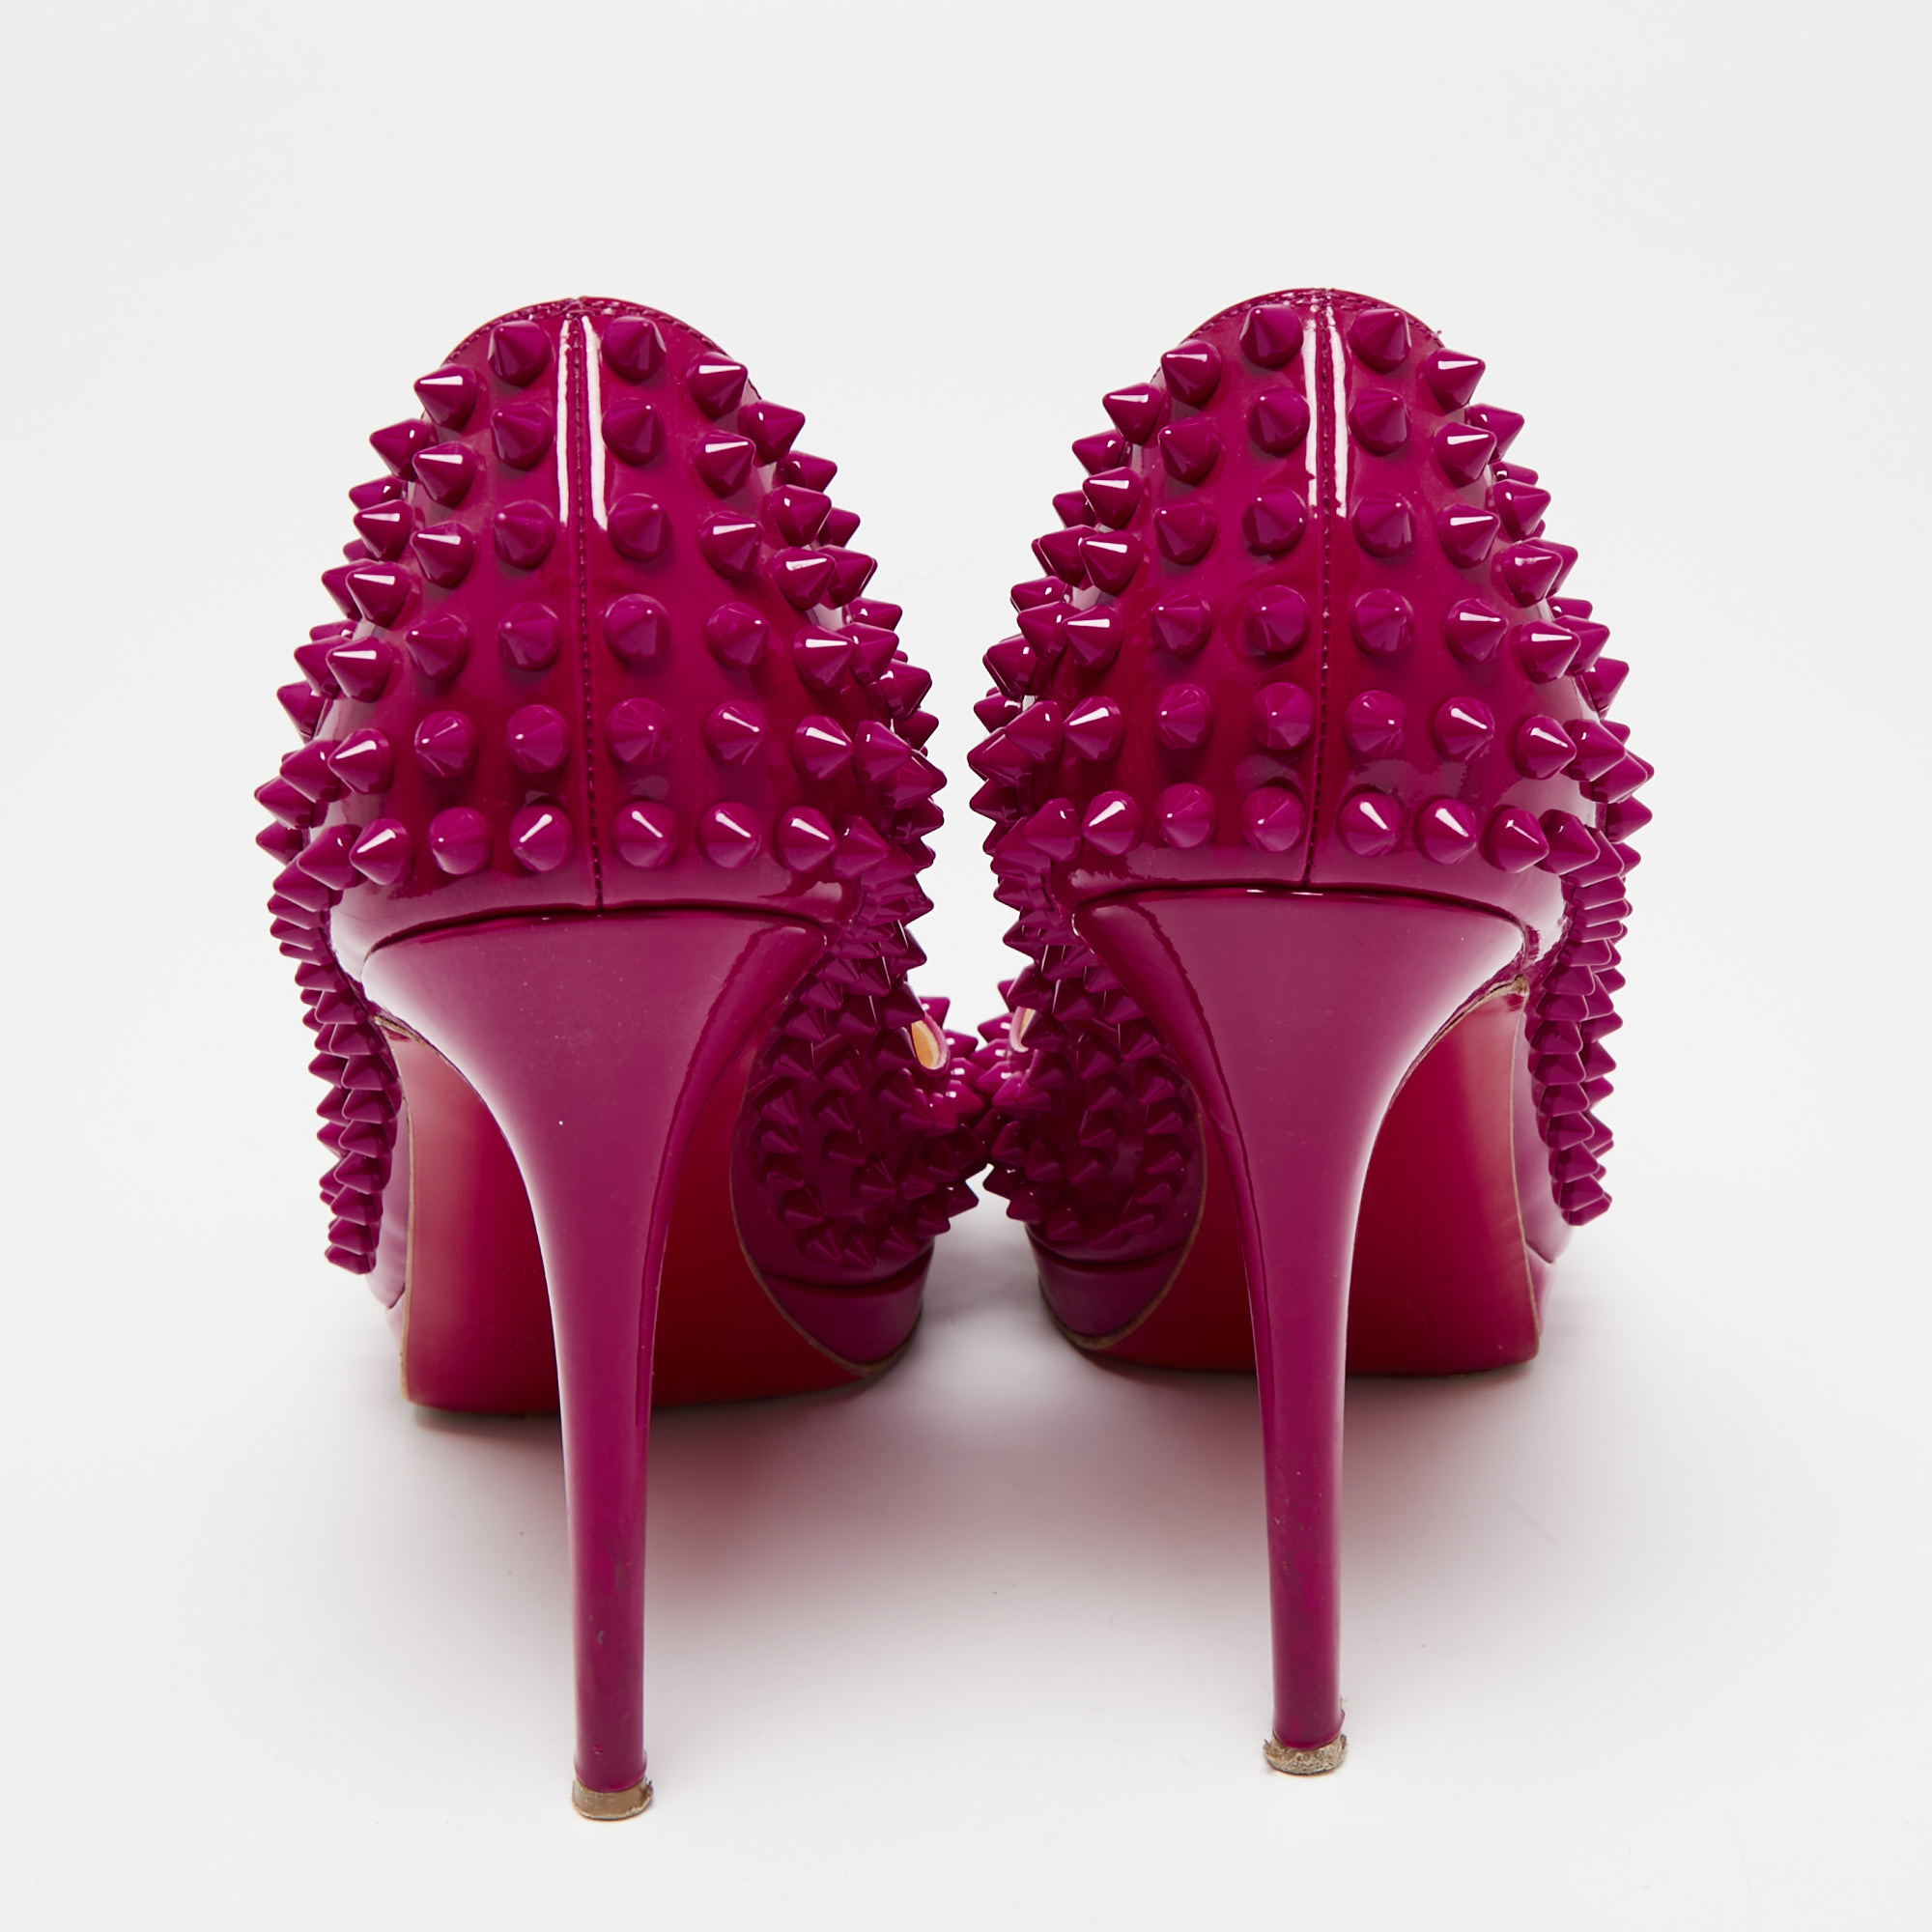 Christian Louboutin Hot Pink Patent Leather Yolanda Spiked Peep-Toe Pumps Size 38.5